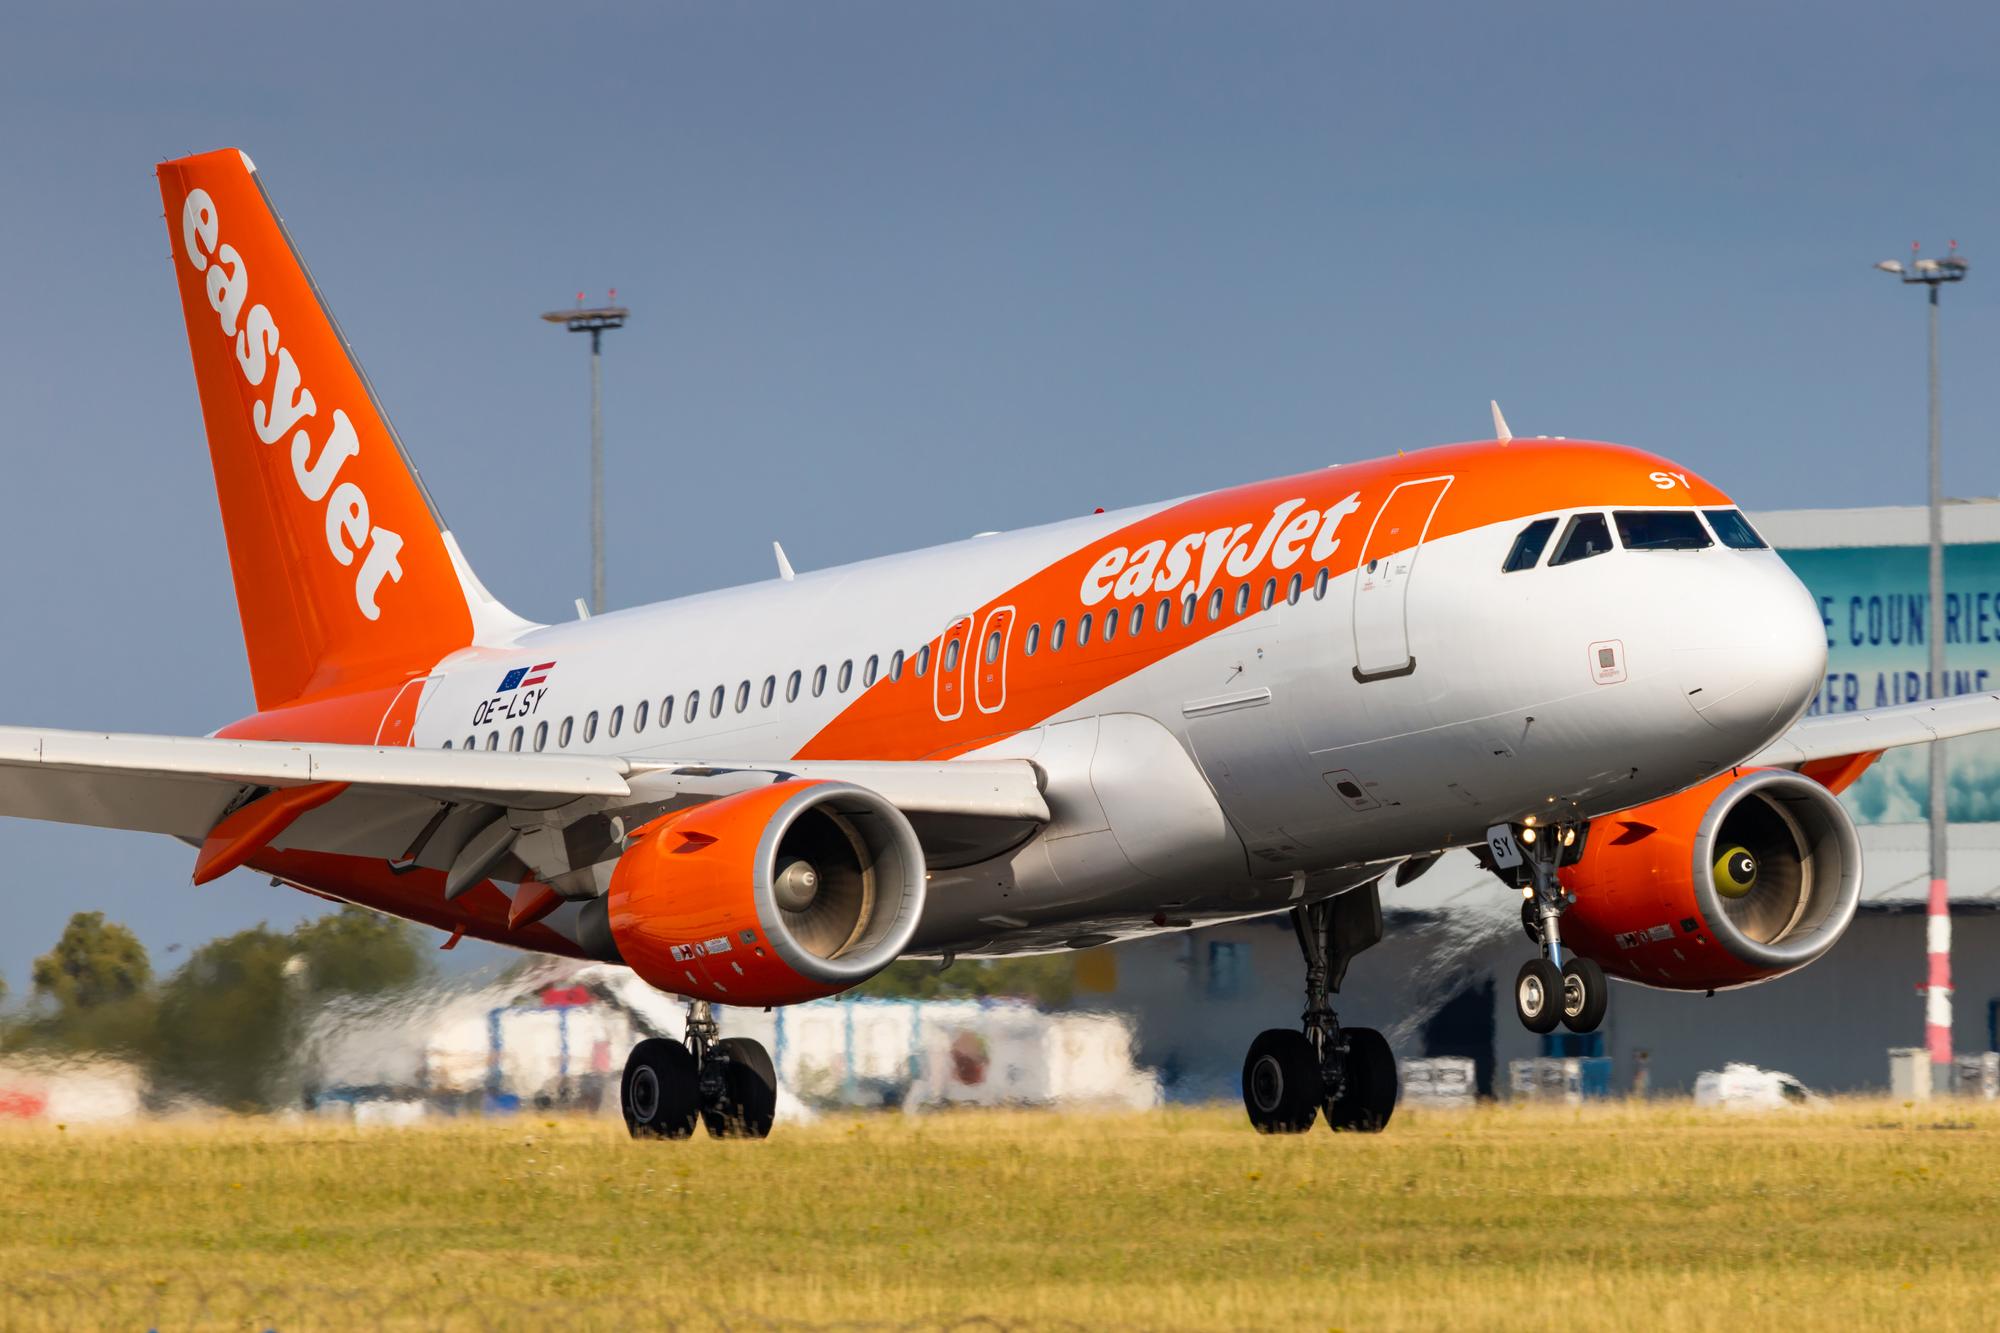 EasyJet flights from Edinburgh Airport resume today | Edinburgh News